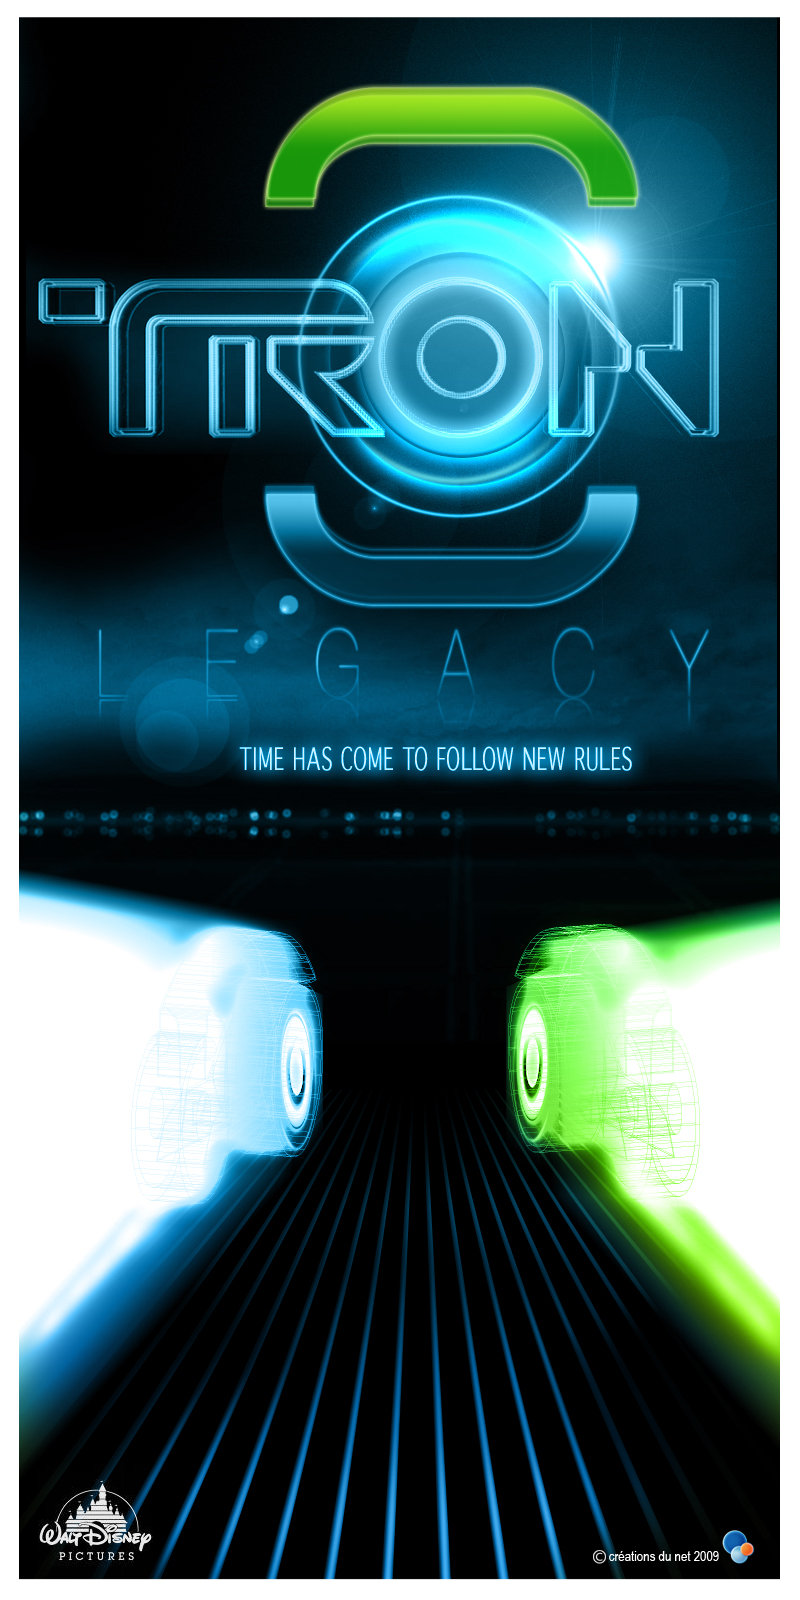 Tron legacy concept 3